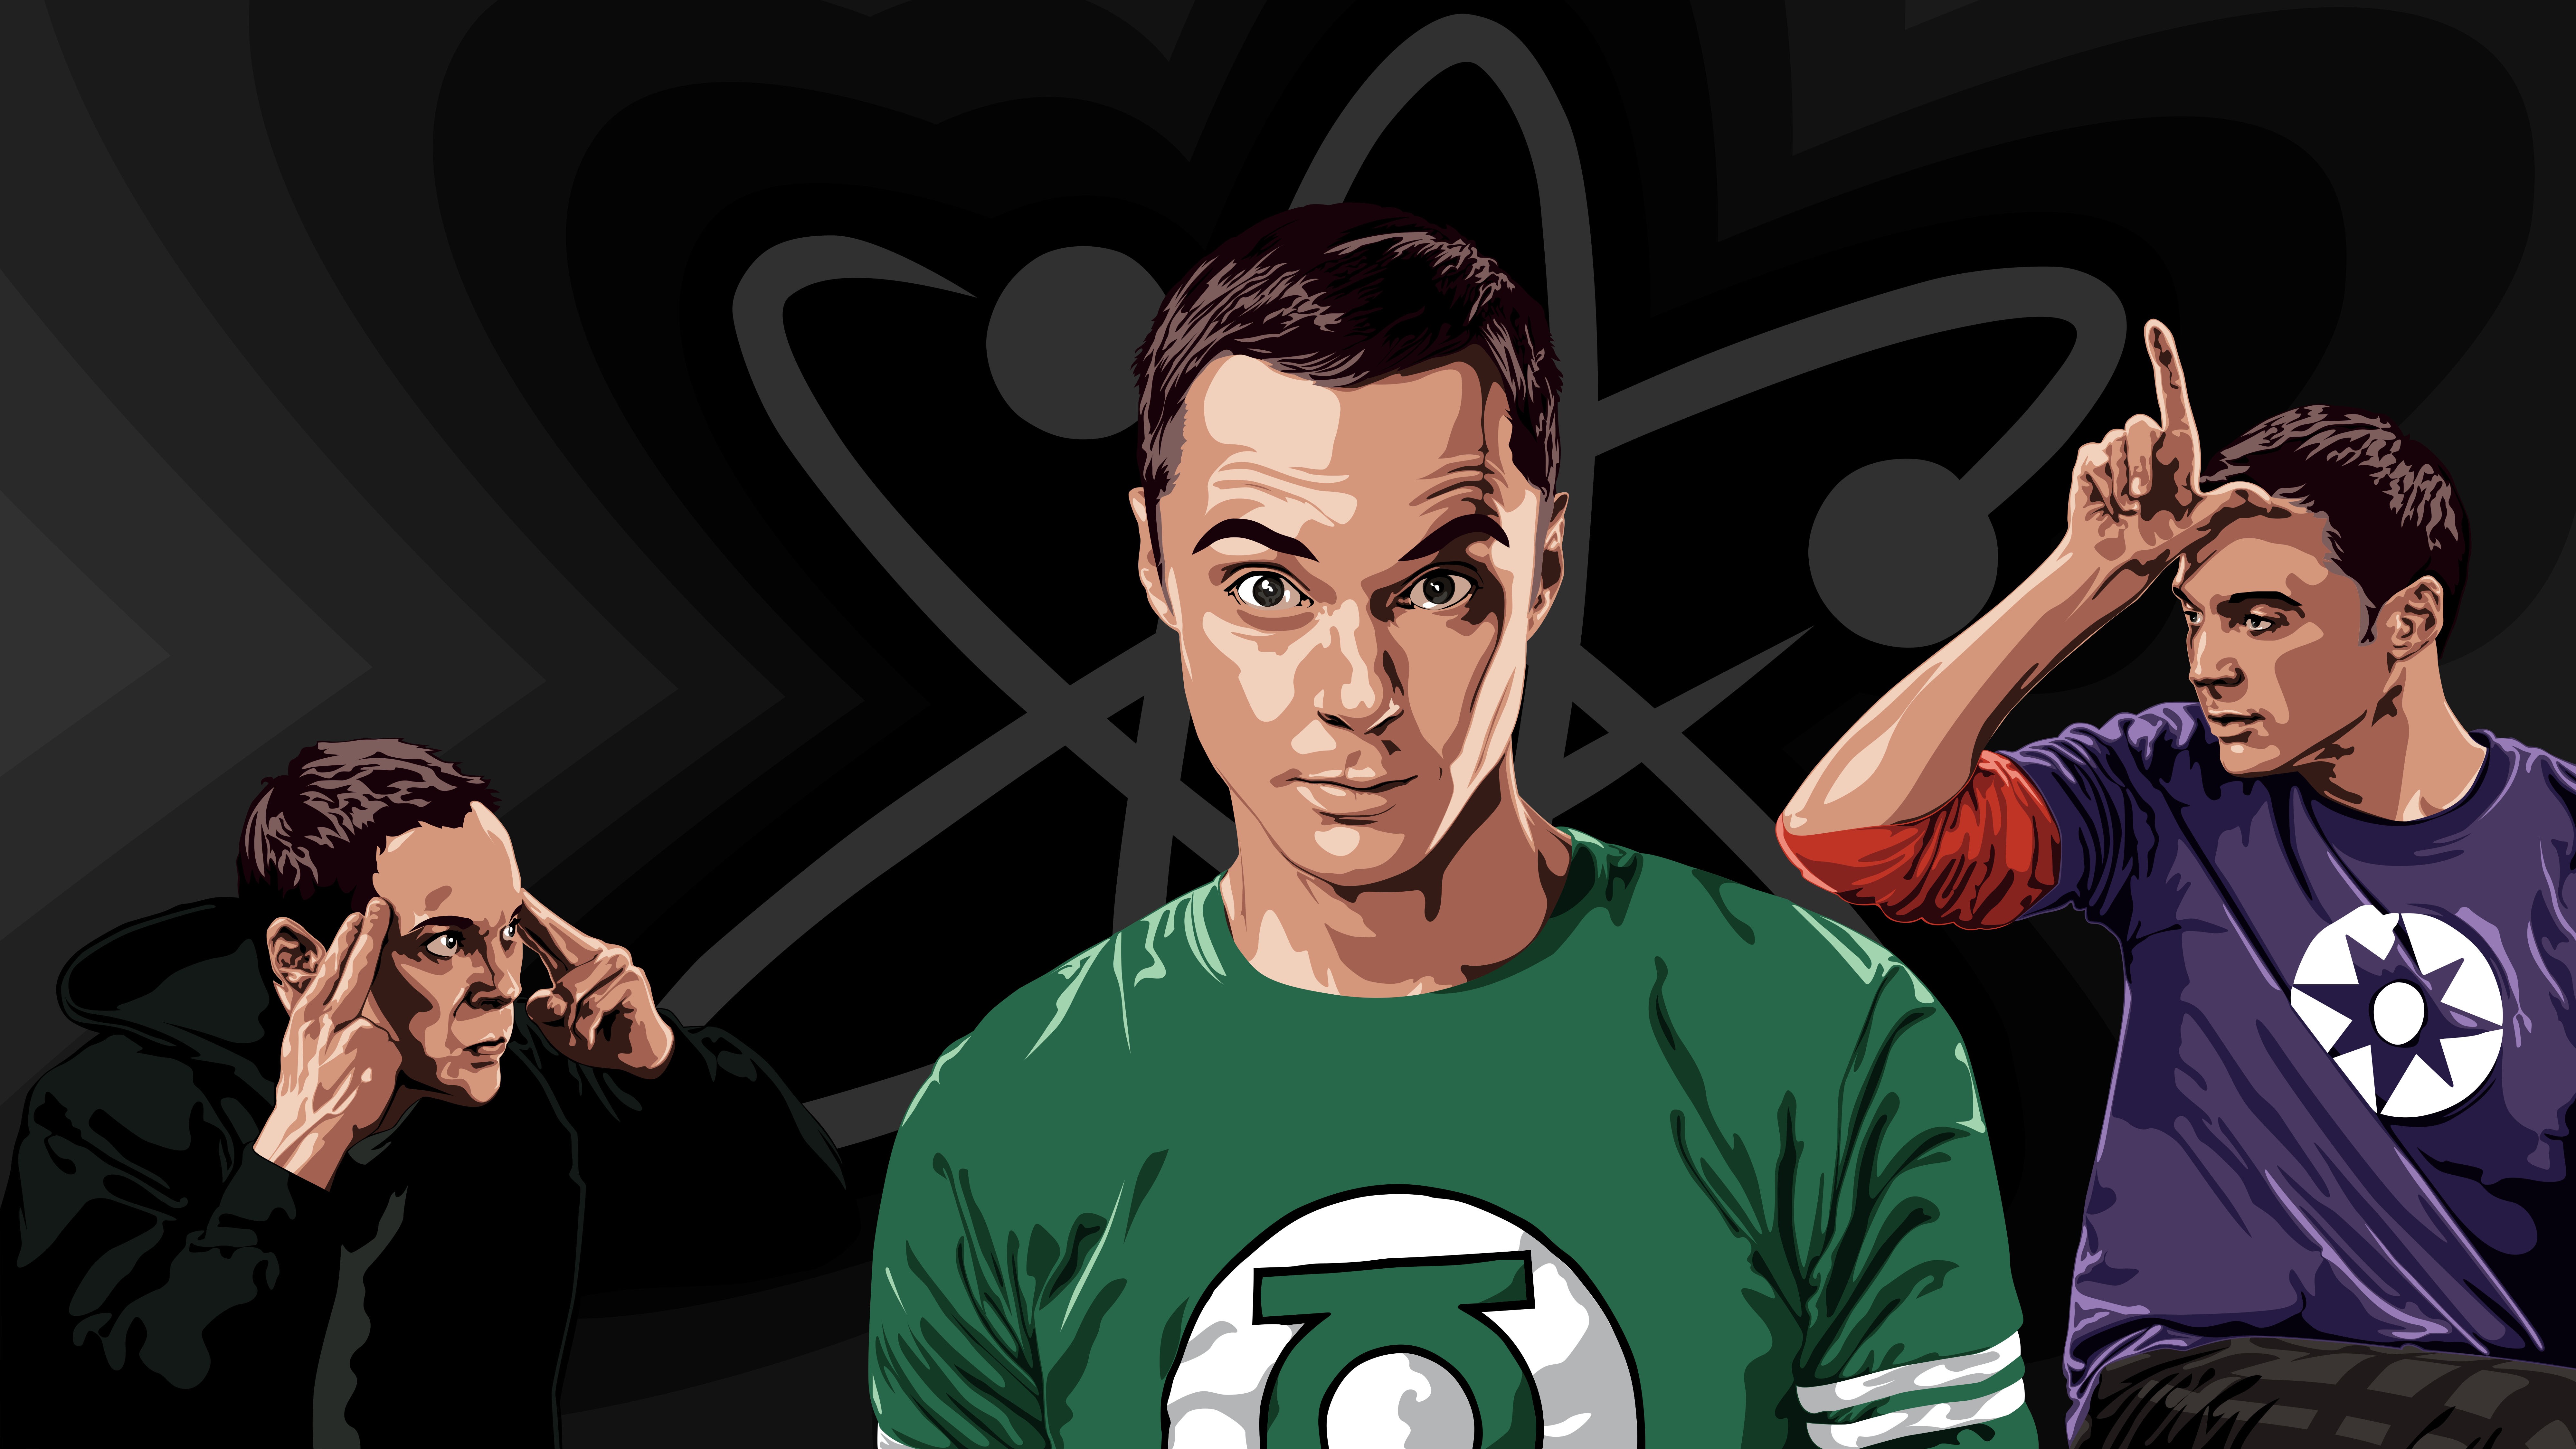 Wallpaper, illustration, cartoon, TV, The Big Bang Theory, Sheldon Cooper, screenshot 8000x4500